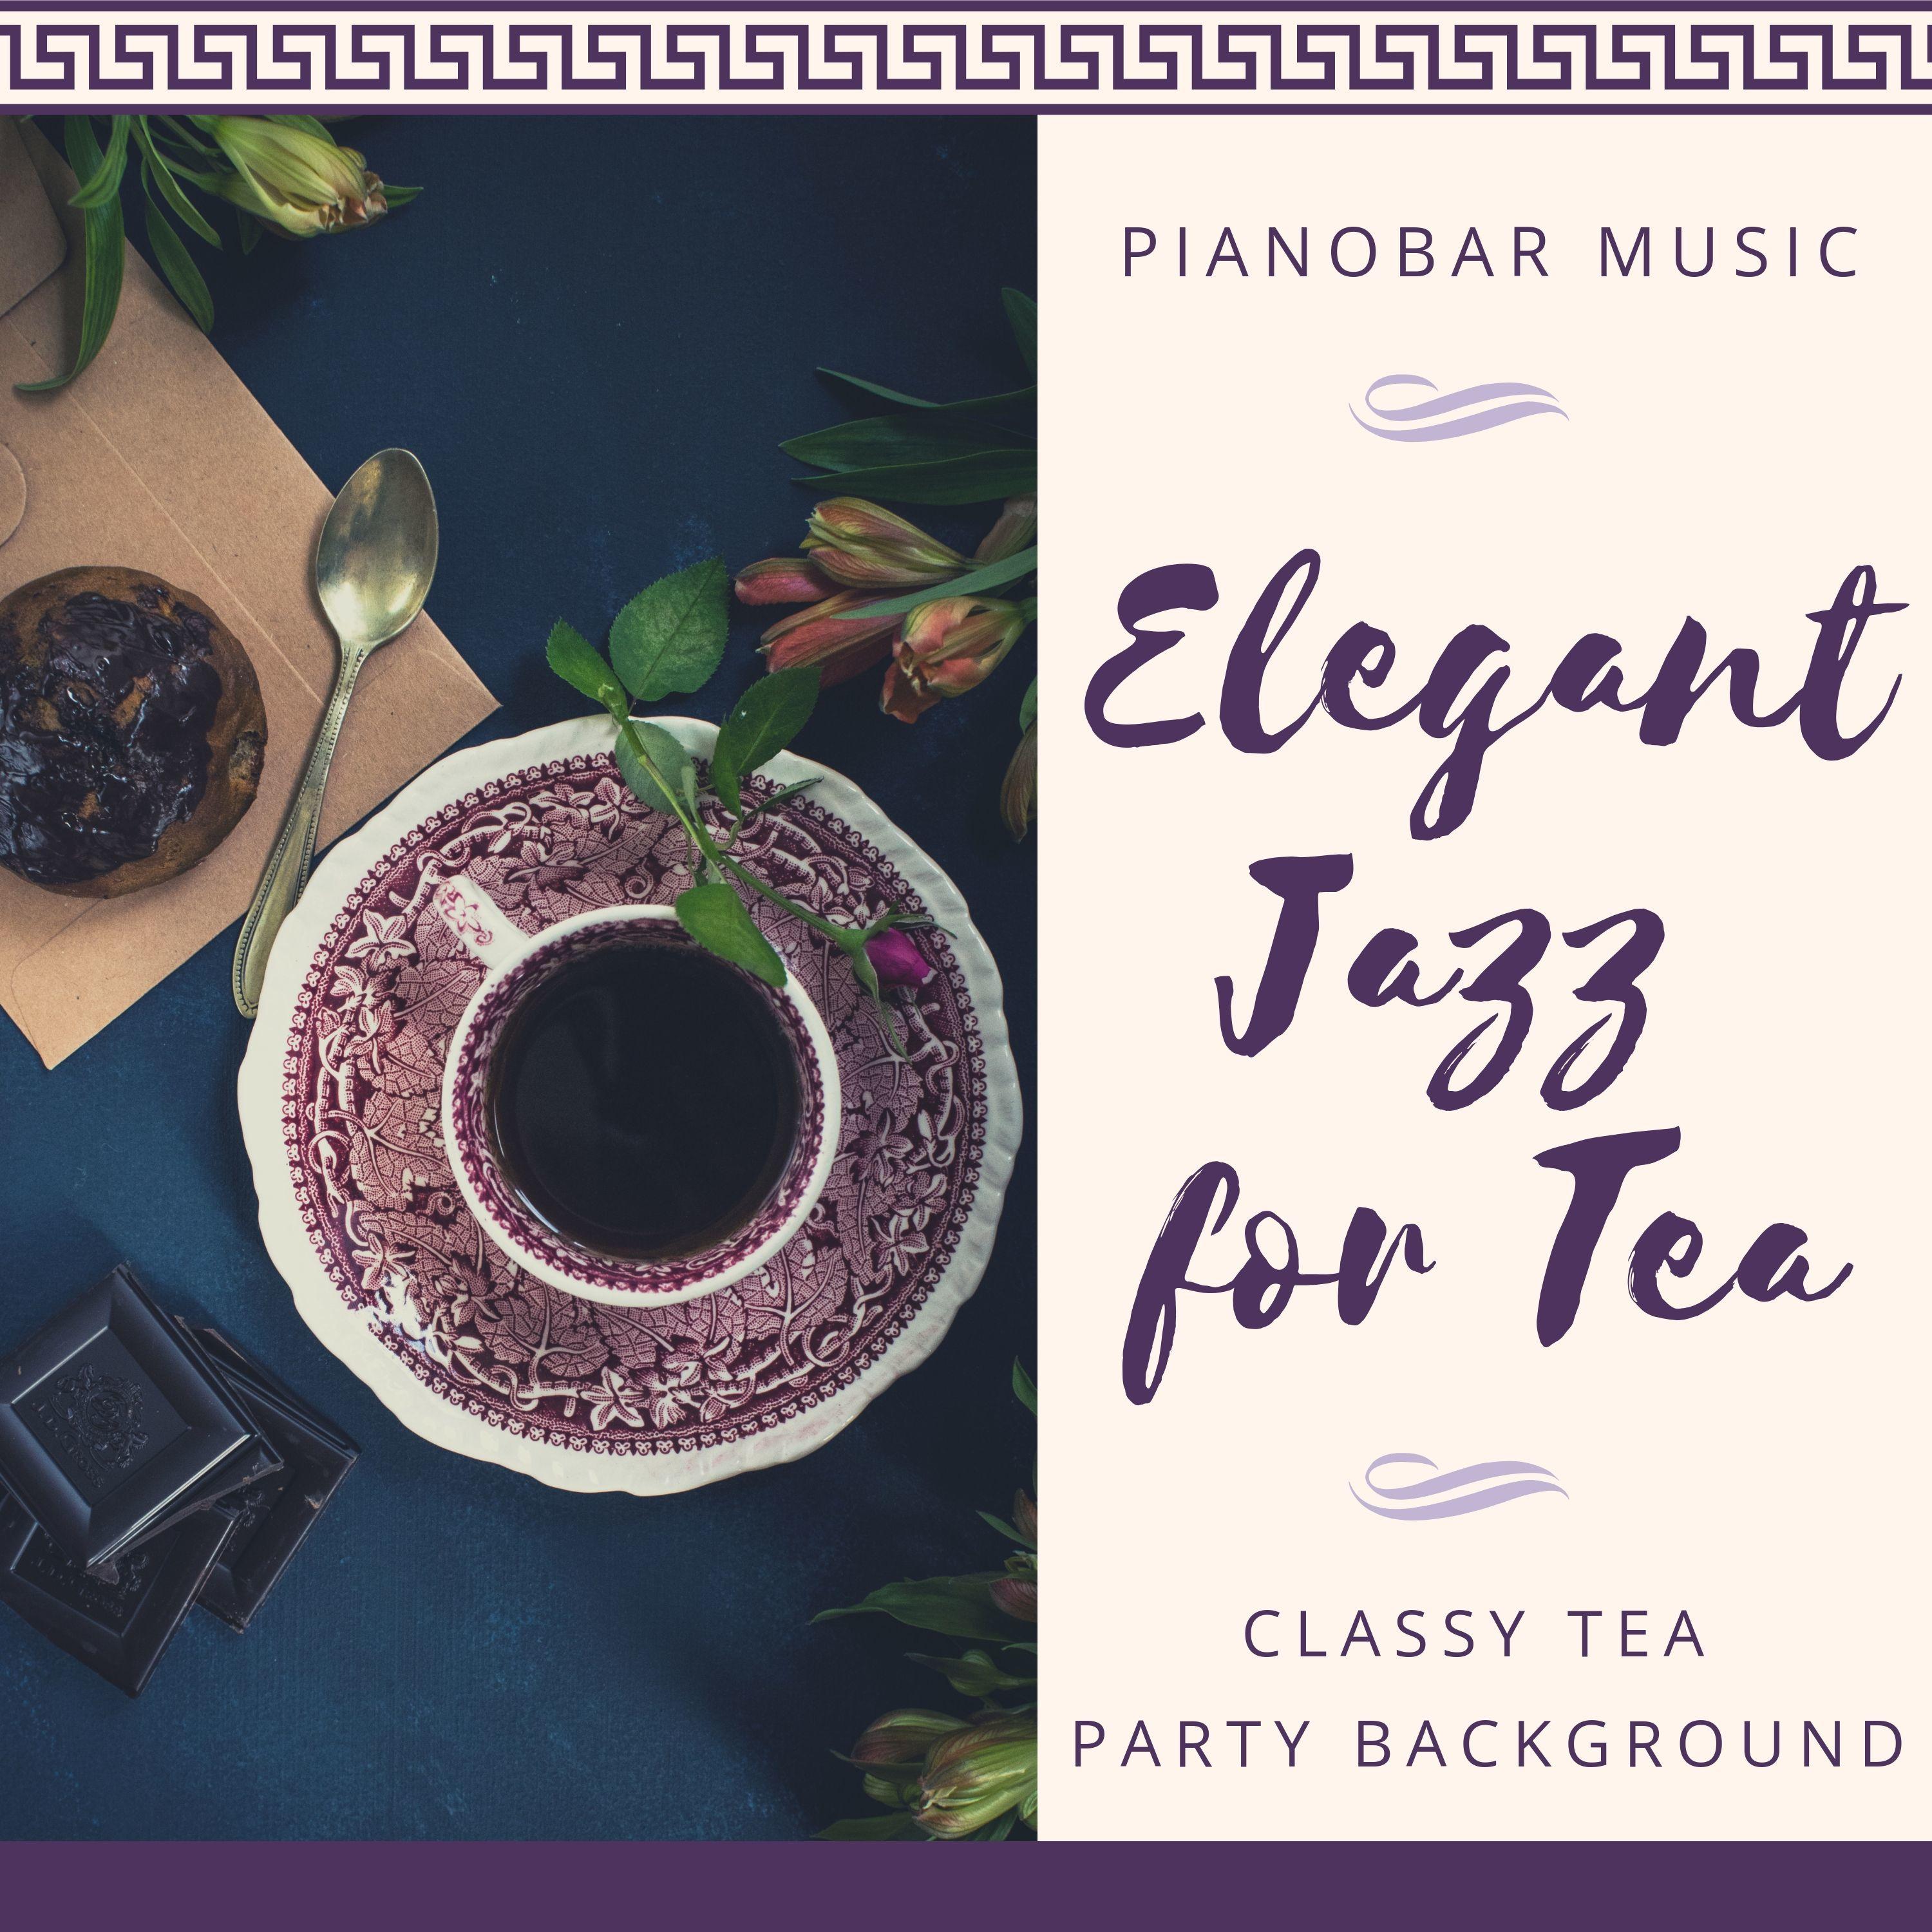 Elegant Jazz for Tea - Classy Tea Party Background Pianobar Music